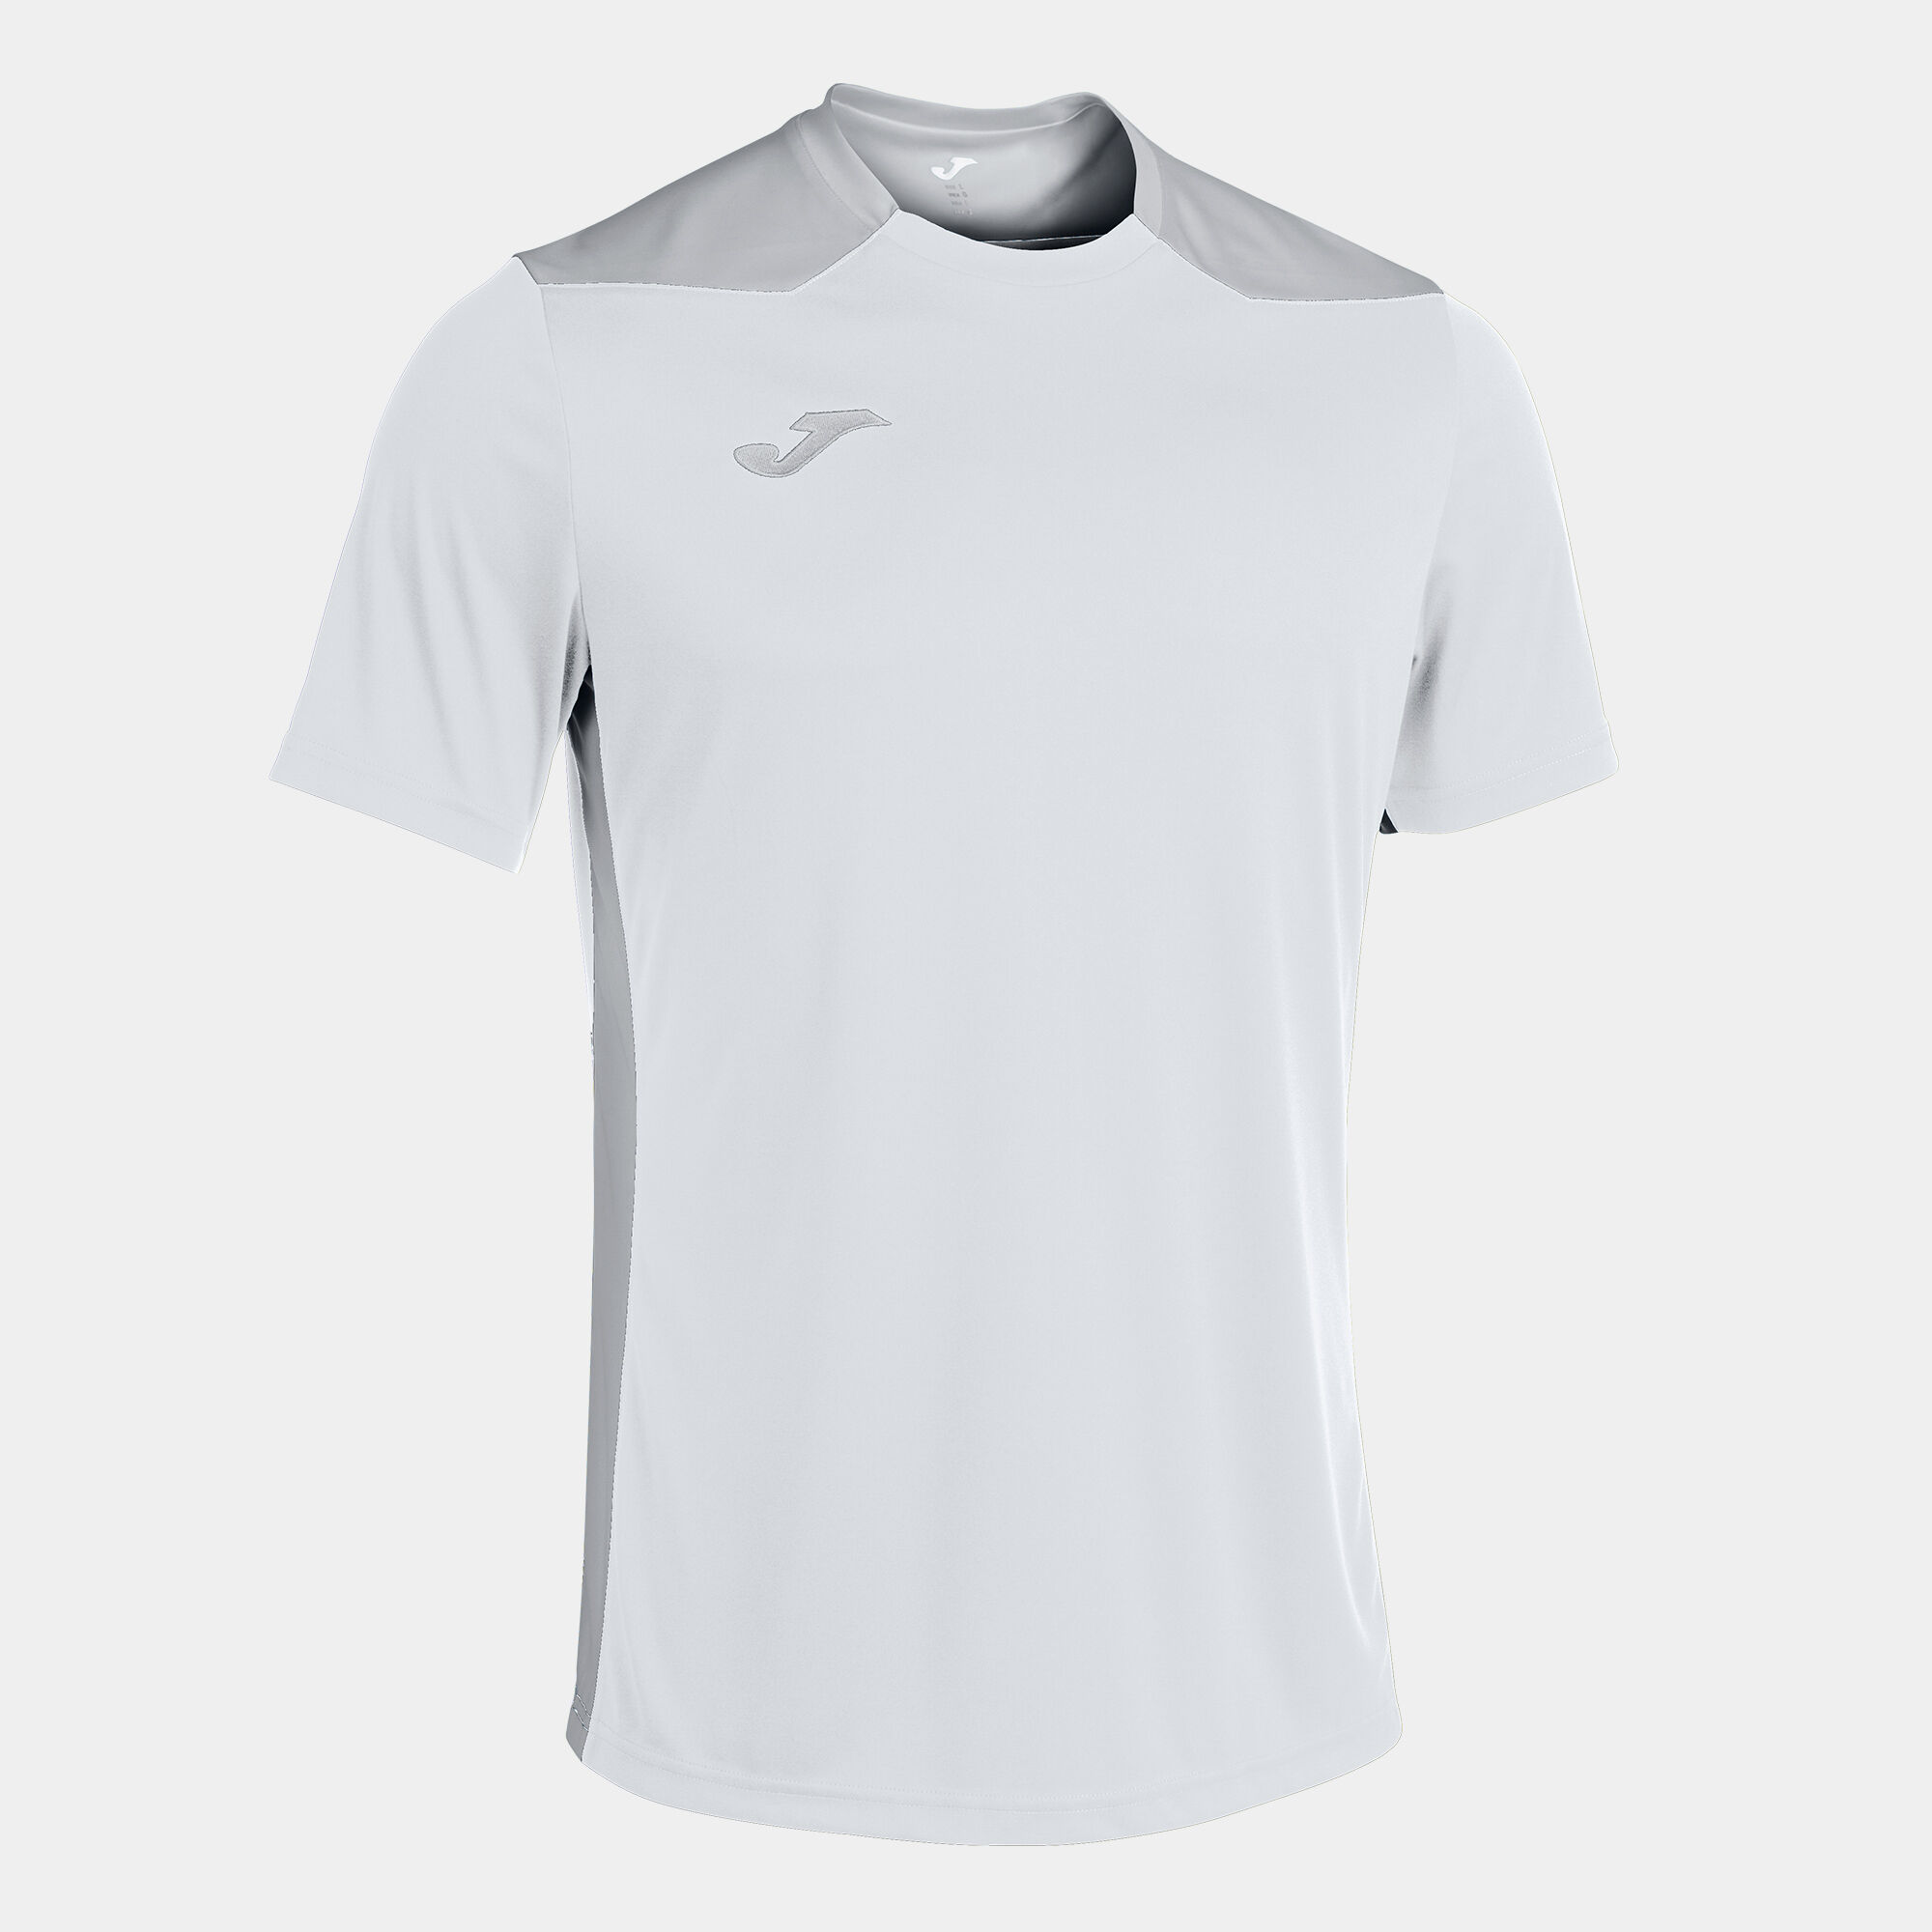 Shirt short sleeve man Championship VI white gray